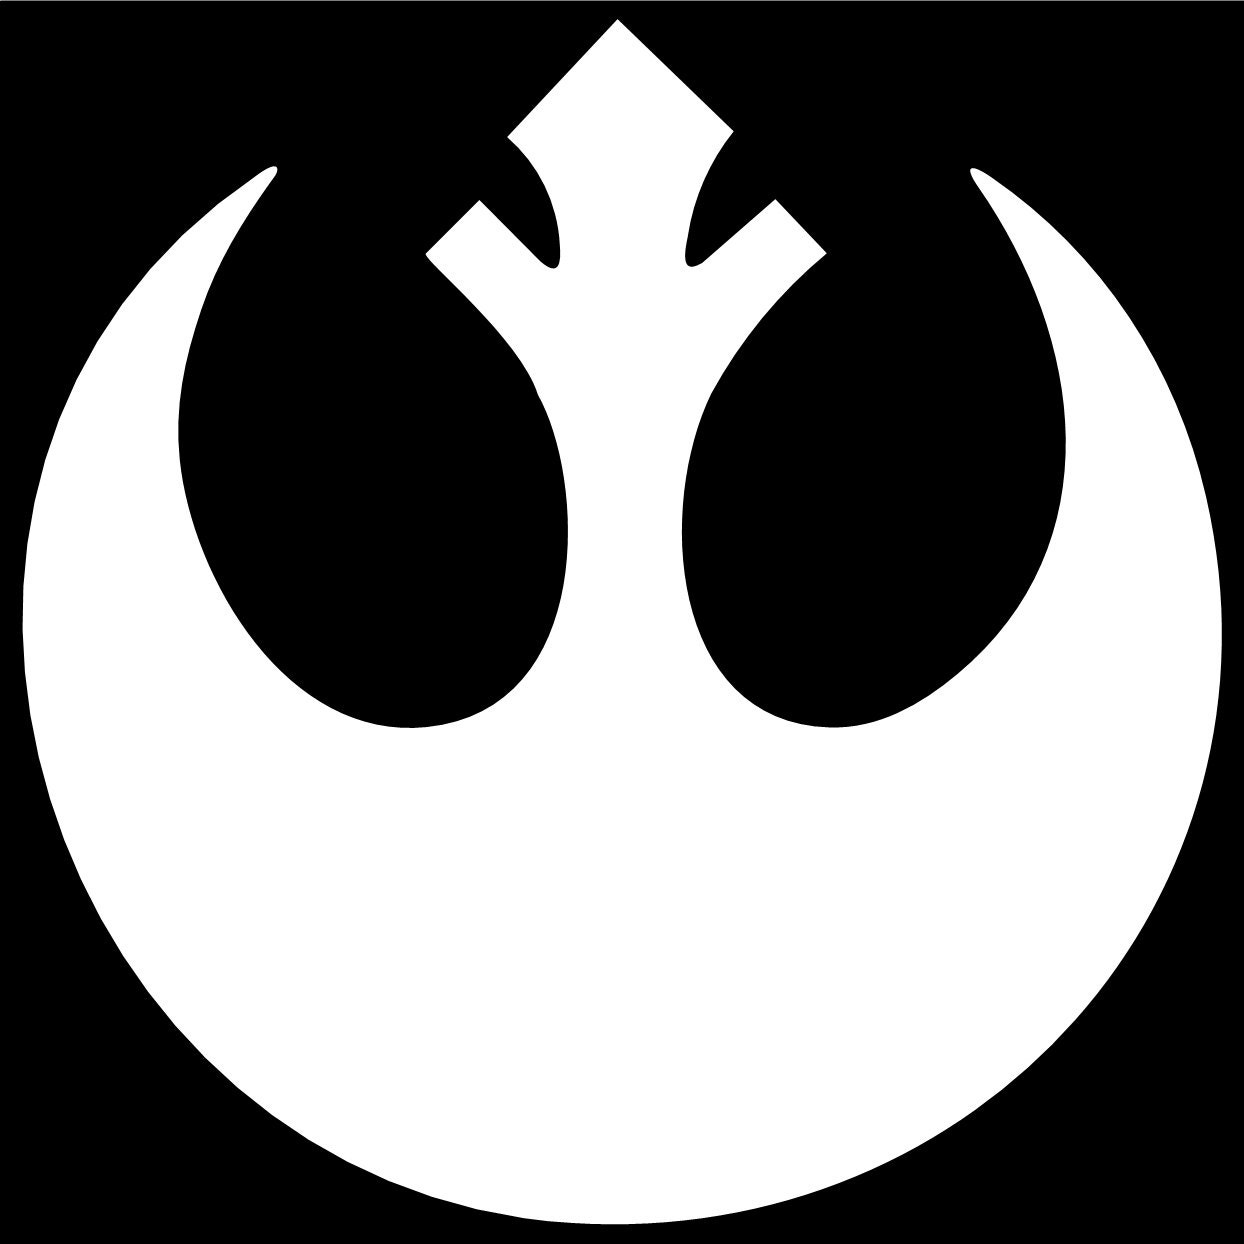 star wars rebellion logo car sticker